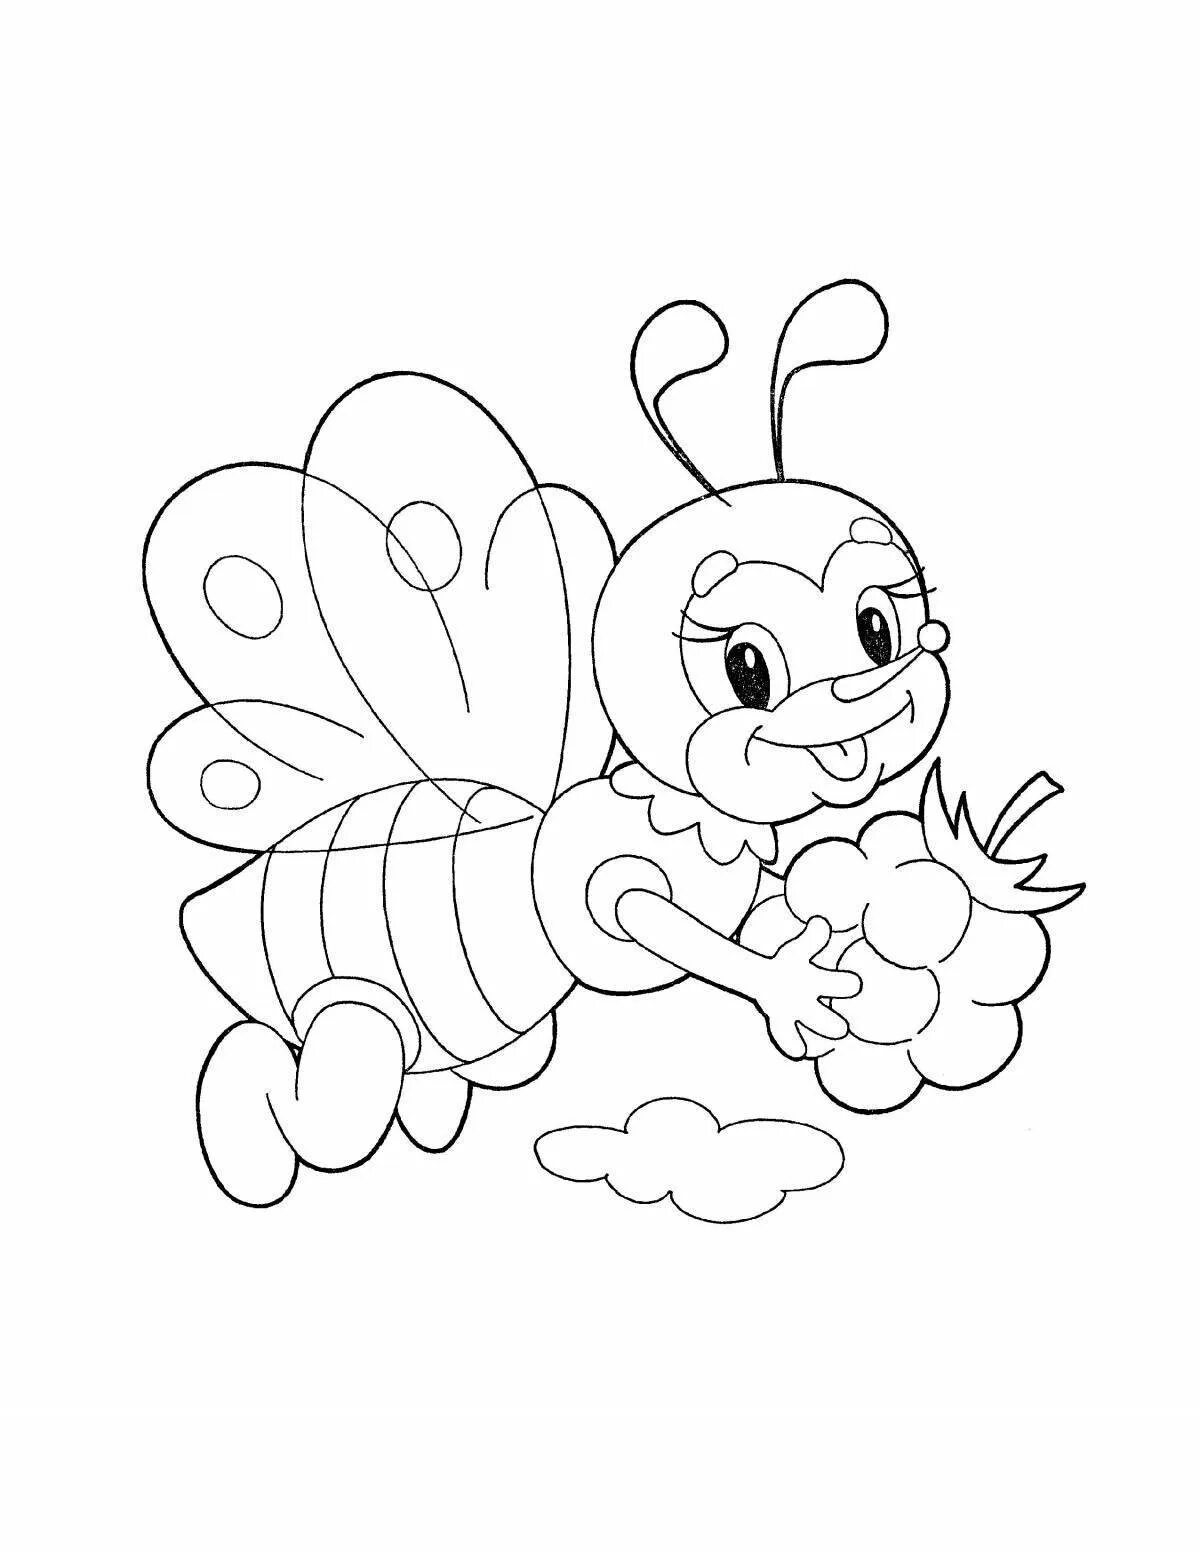 Раскраска пчёлка для детей. Пчела раскраска. Пчелка раскраска для малышей. Пчела раскраска для малышей. Раскраска пчела для детей